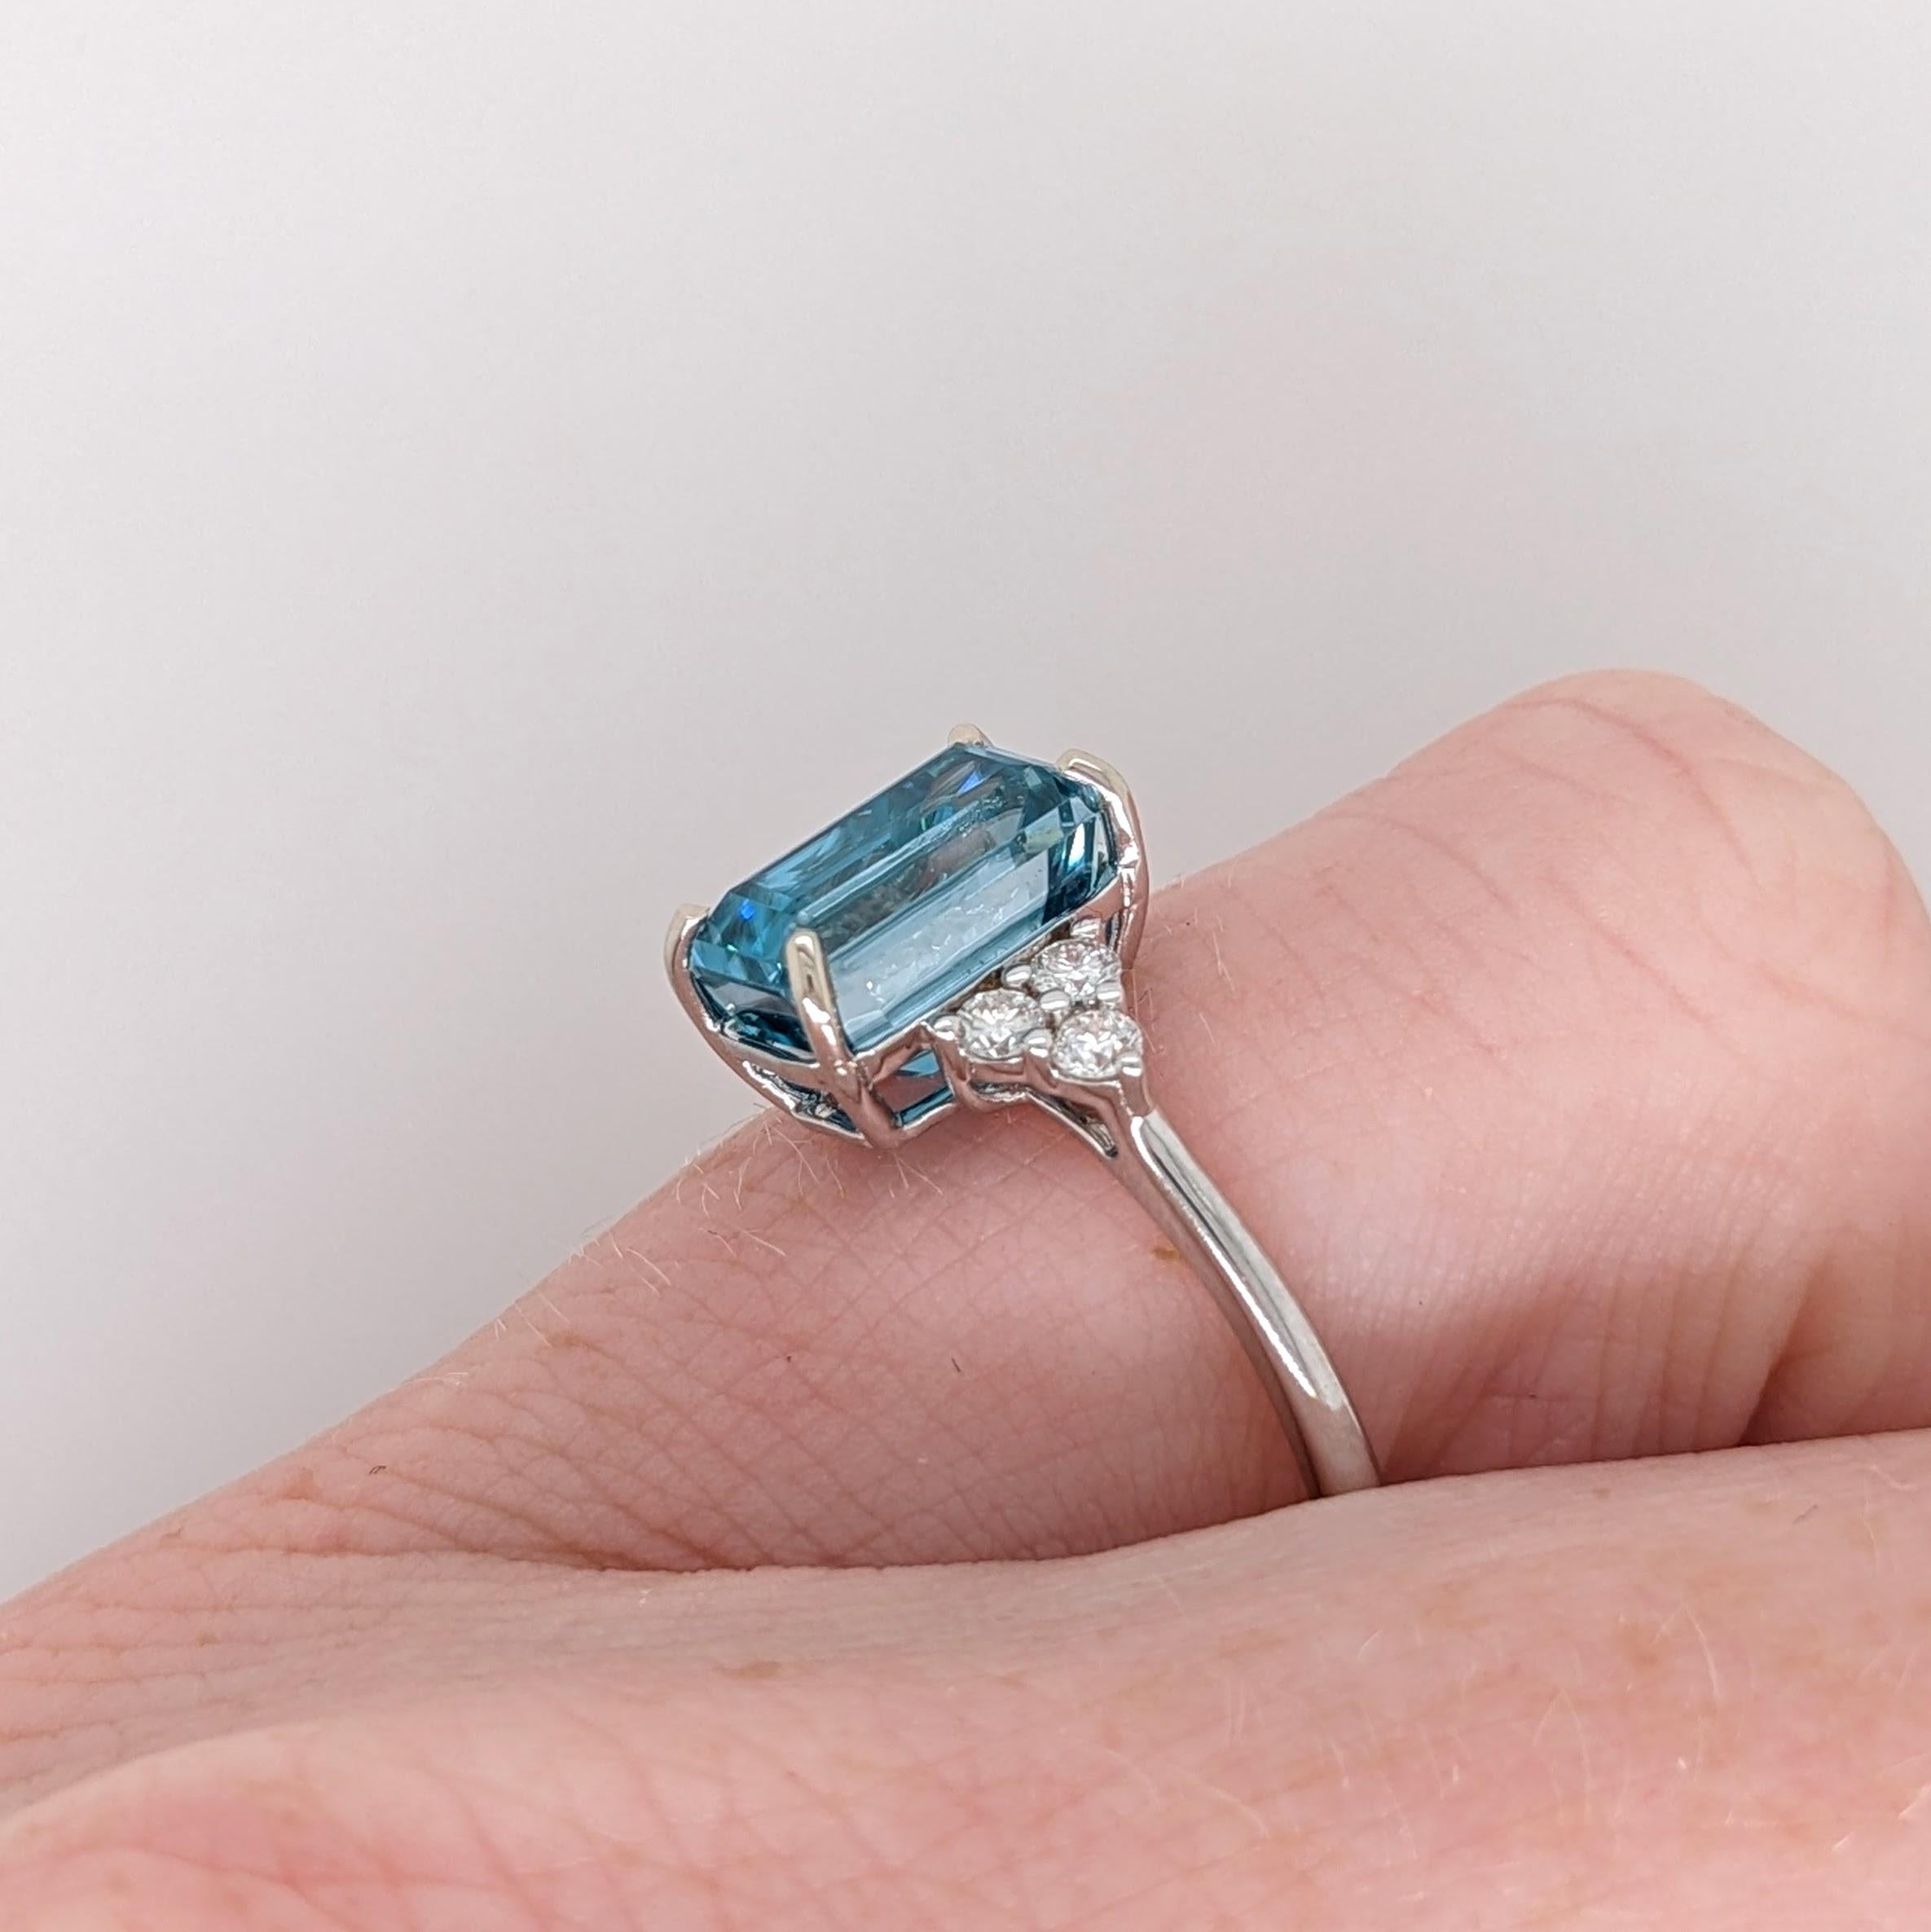 4.21ct Blue Zircon w Diamond Accents in 14K White Gold Emerald Cut 9.5x6mm 3